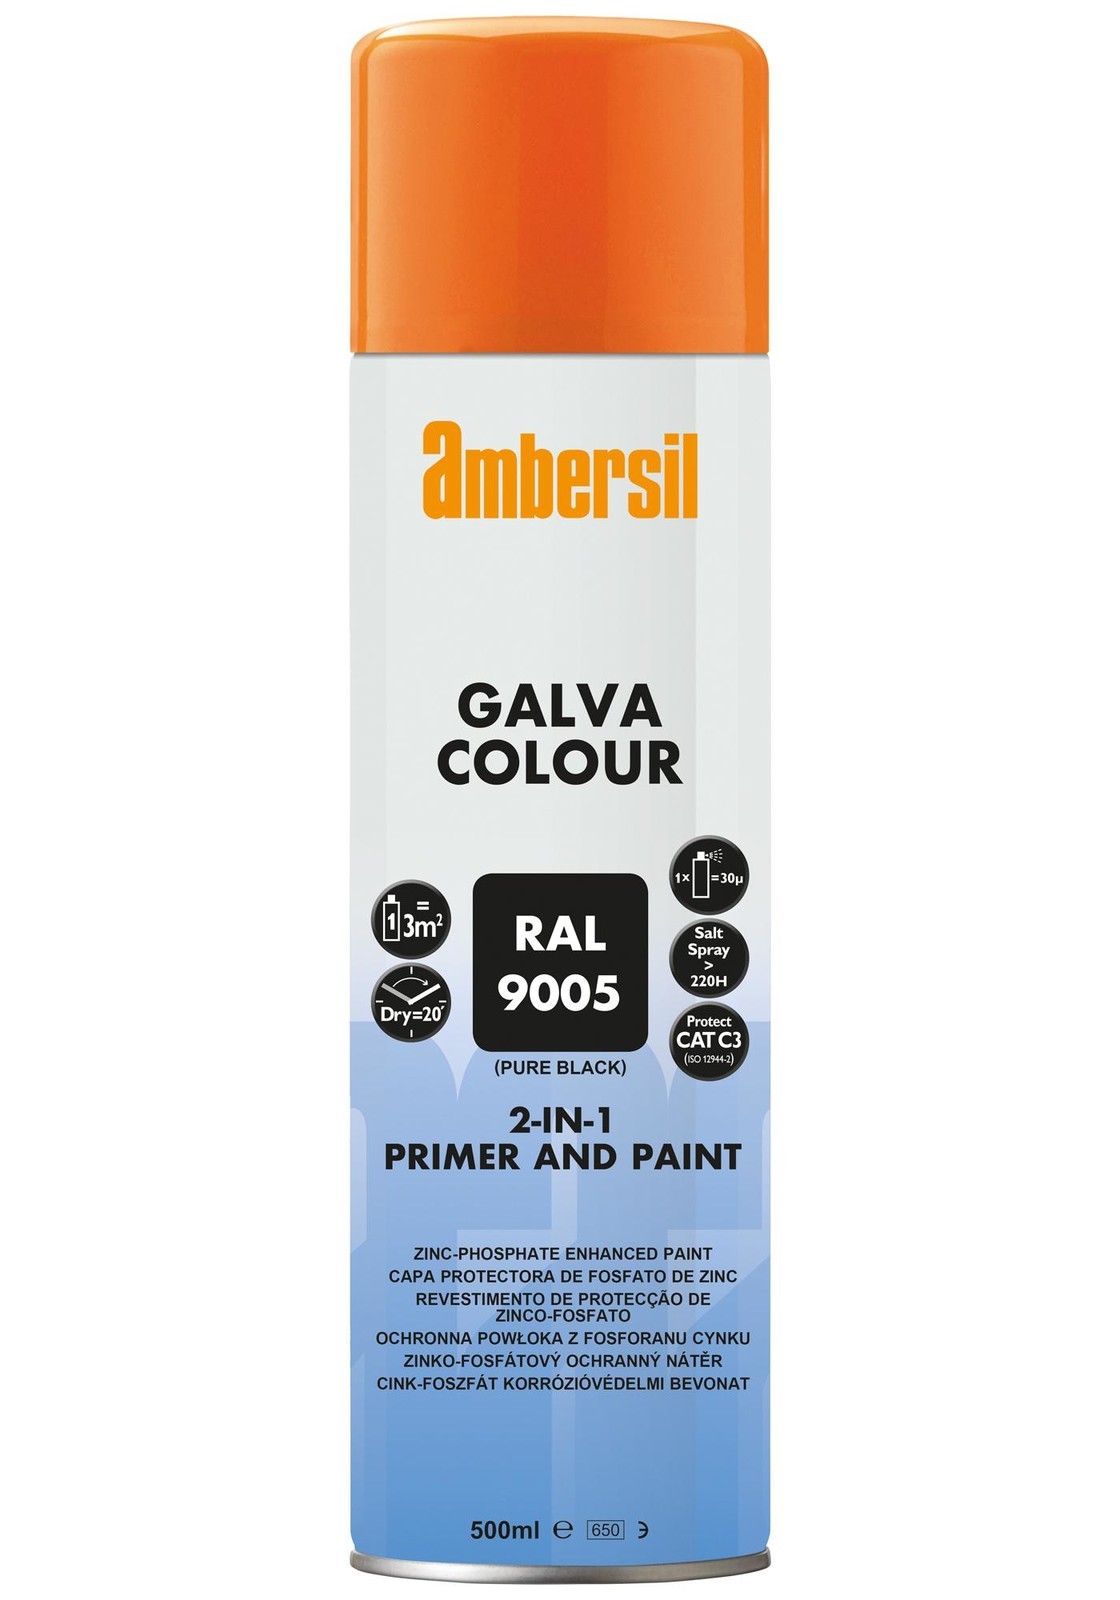 Ambersil Galva Colour Black Ral 9005, 500Ml Coating, Aerosol, 500Ml